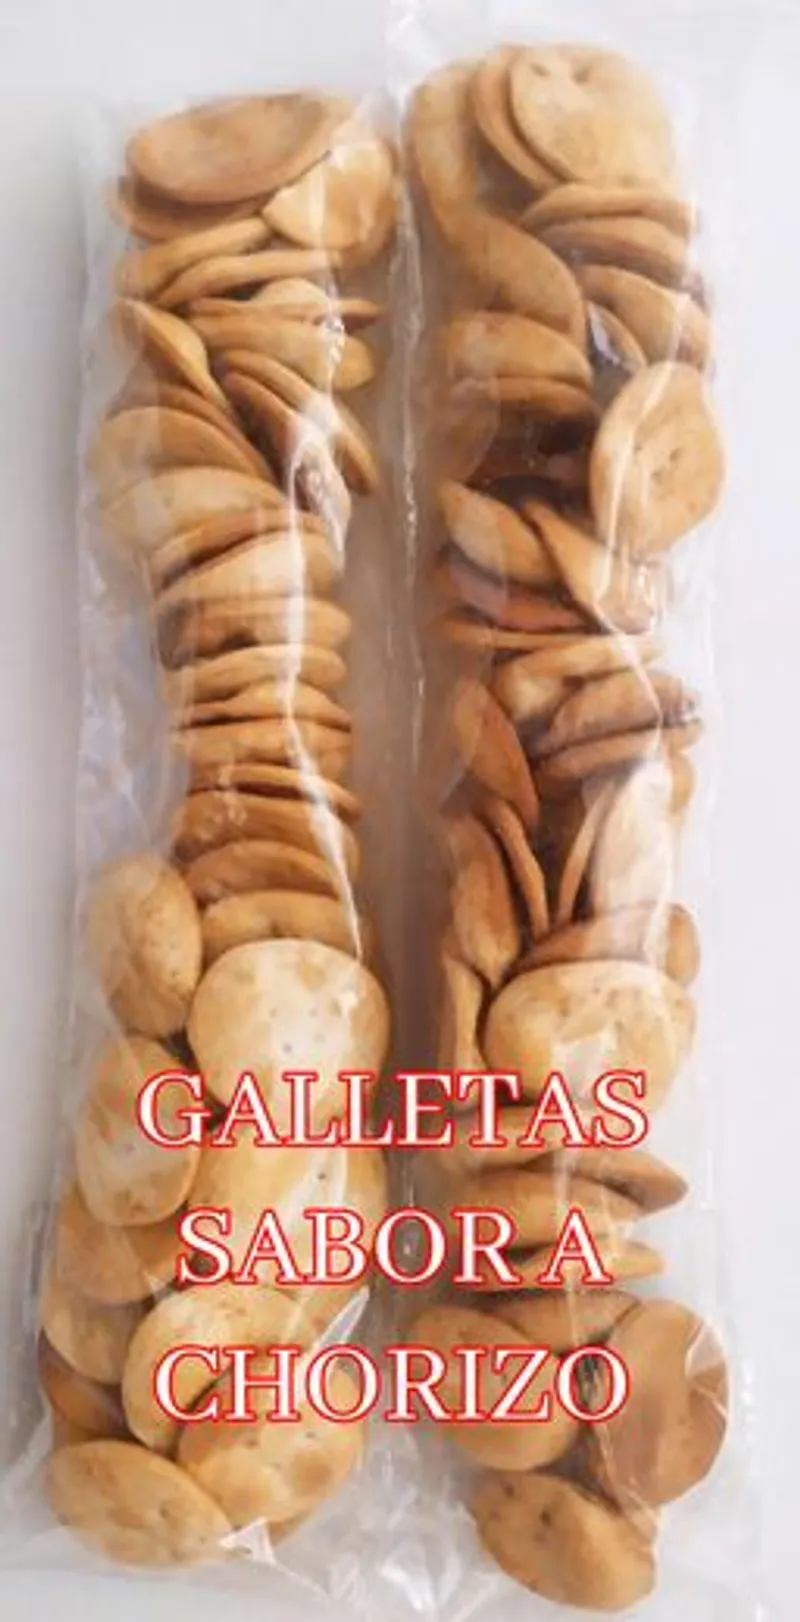 GALLETAS SABOR A CHORIZO (5 packs)